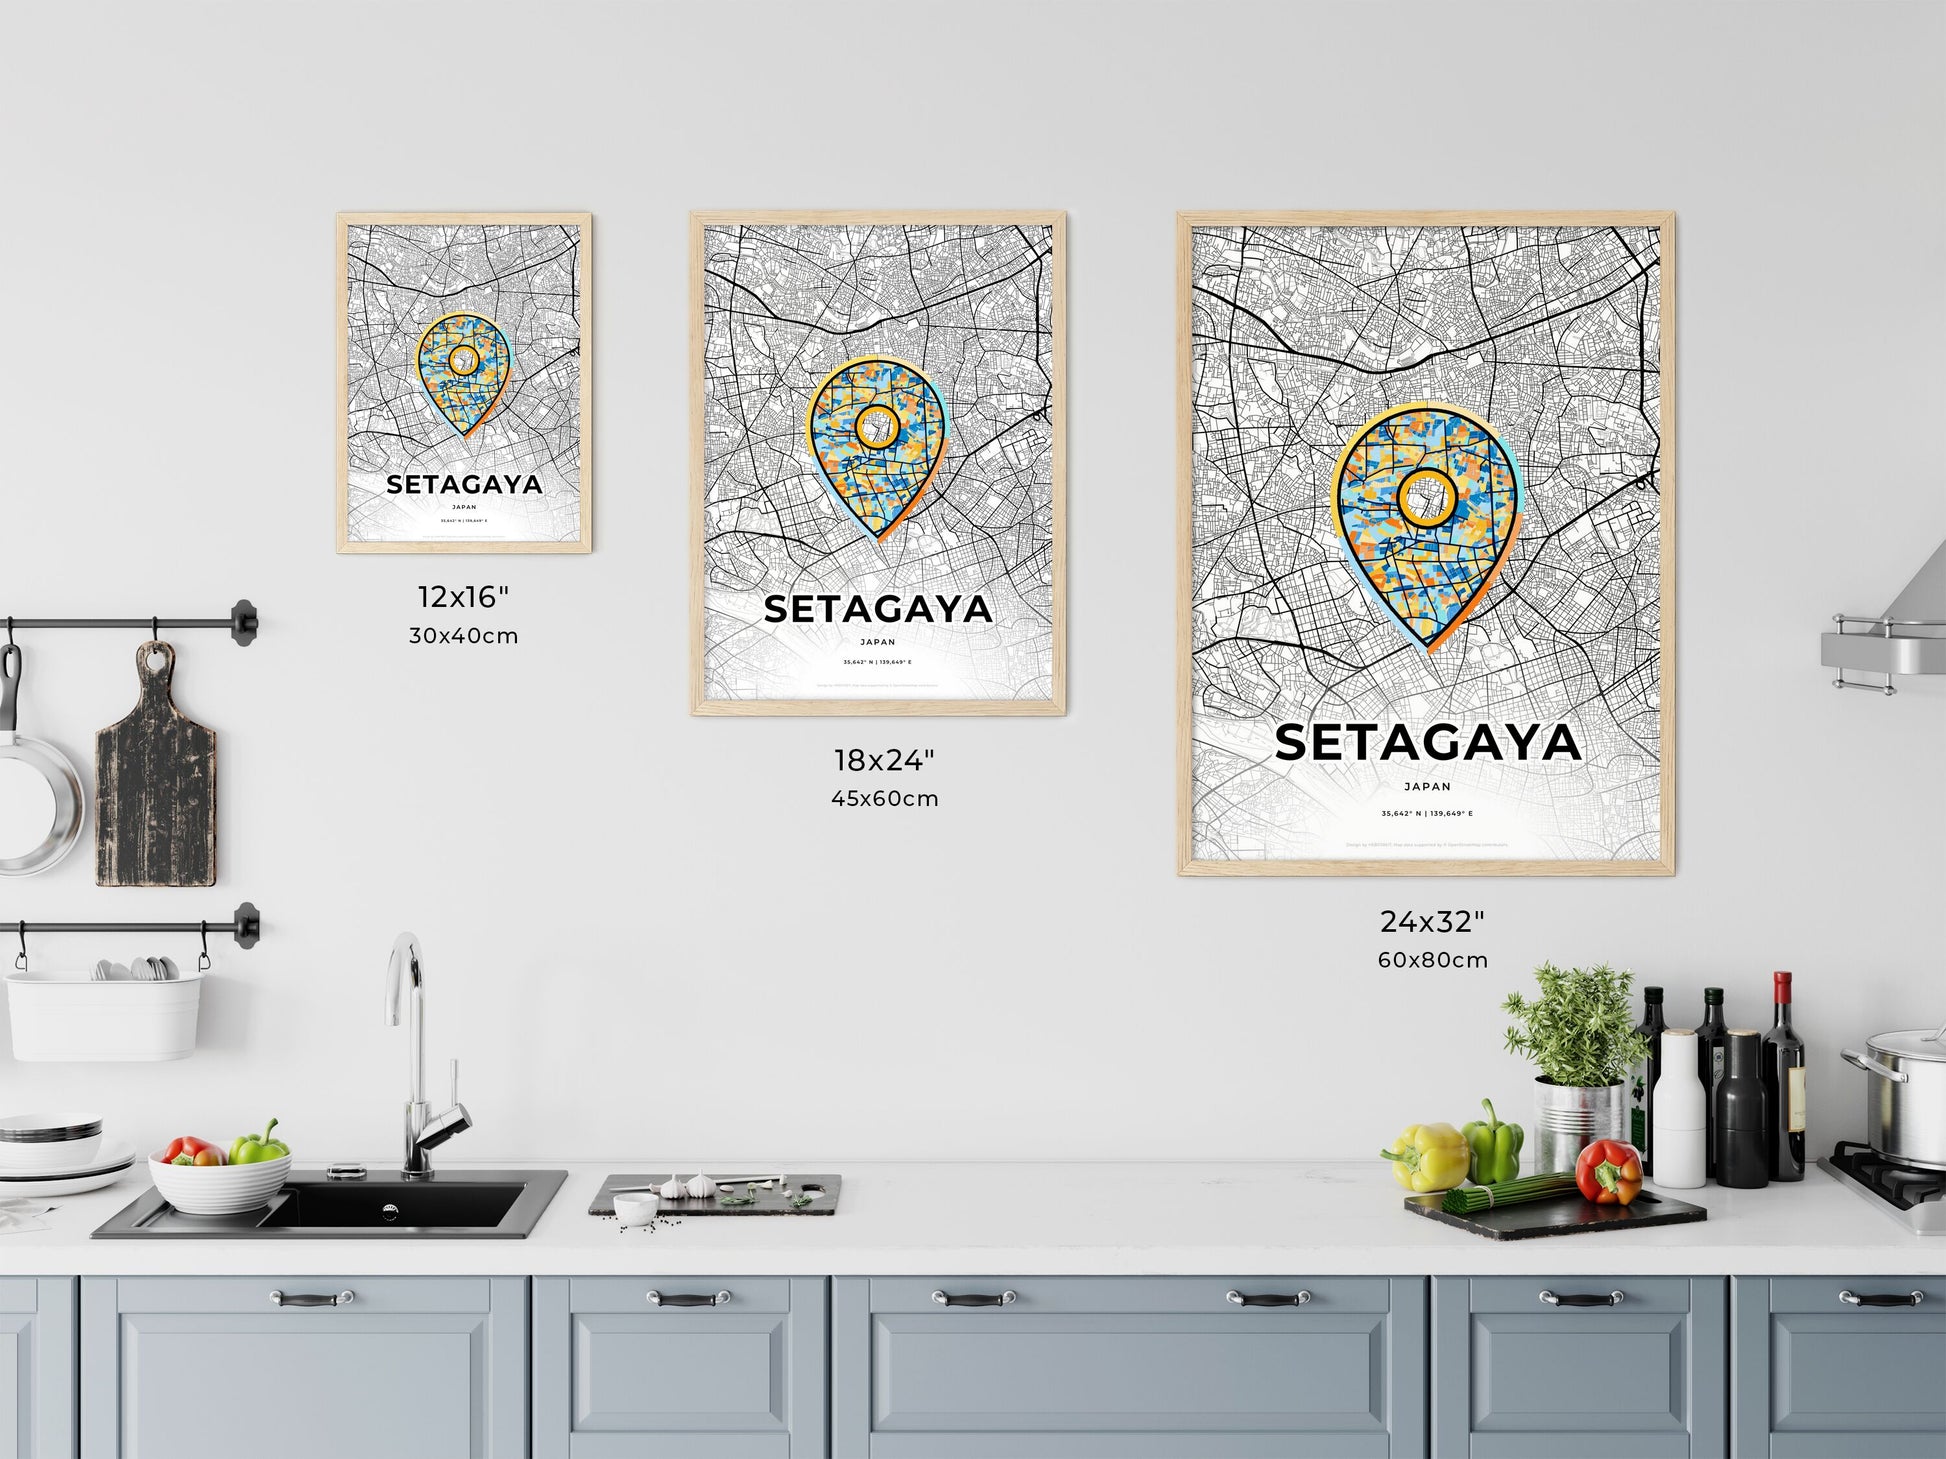 SETAGAYA JAPAN minimal art map with a colorful icon.